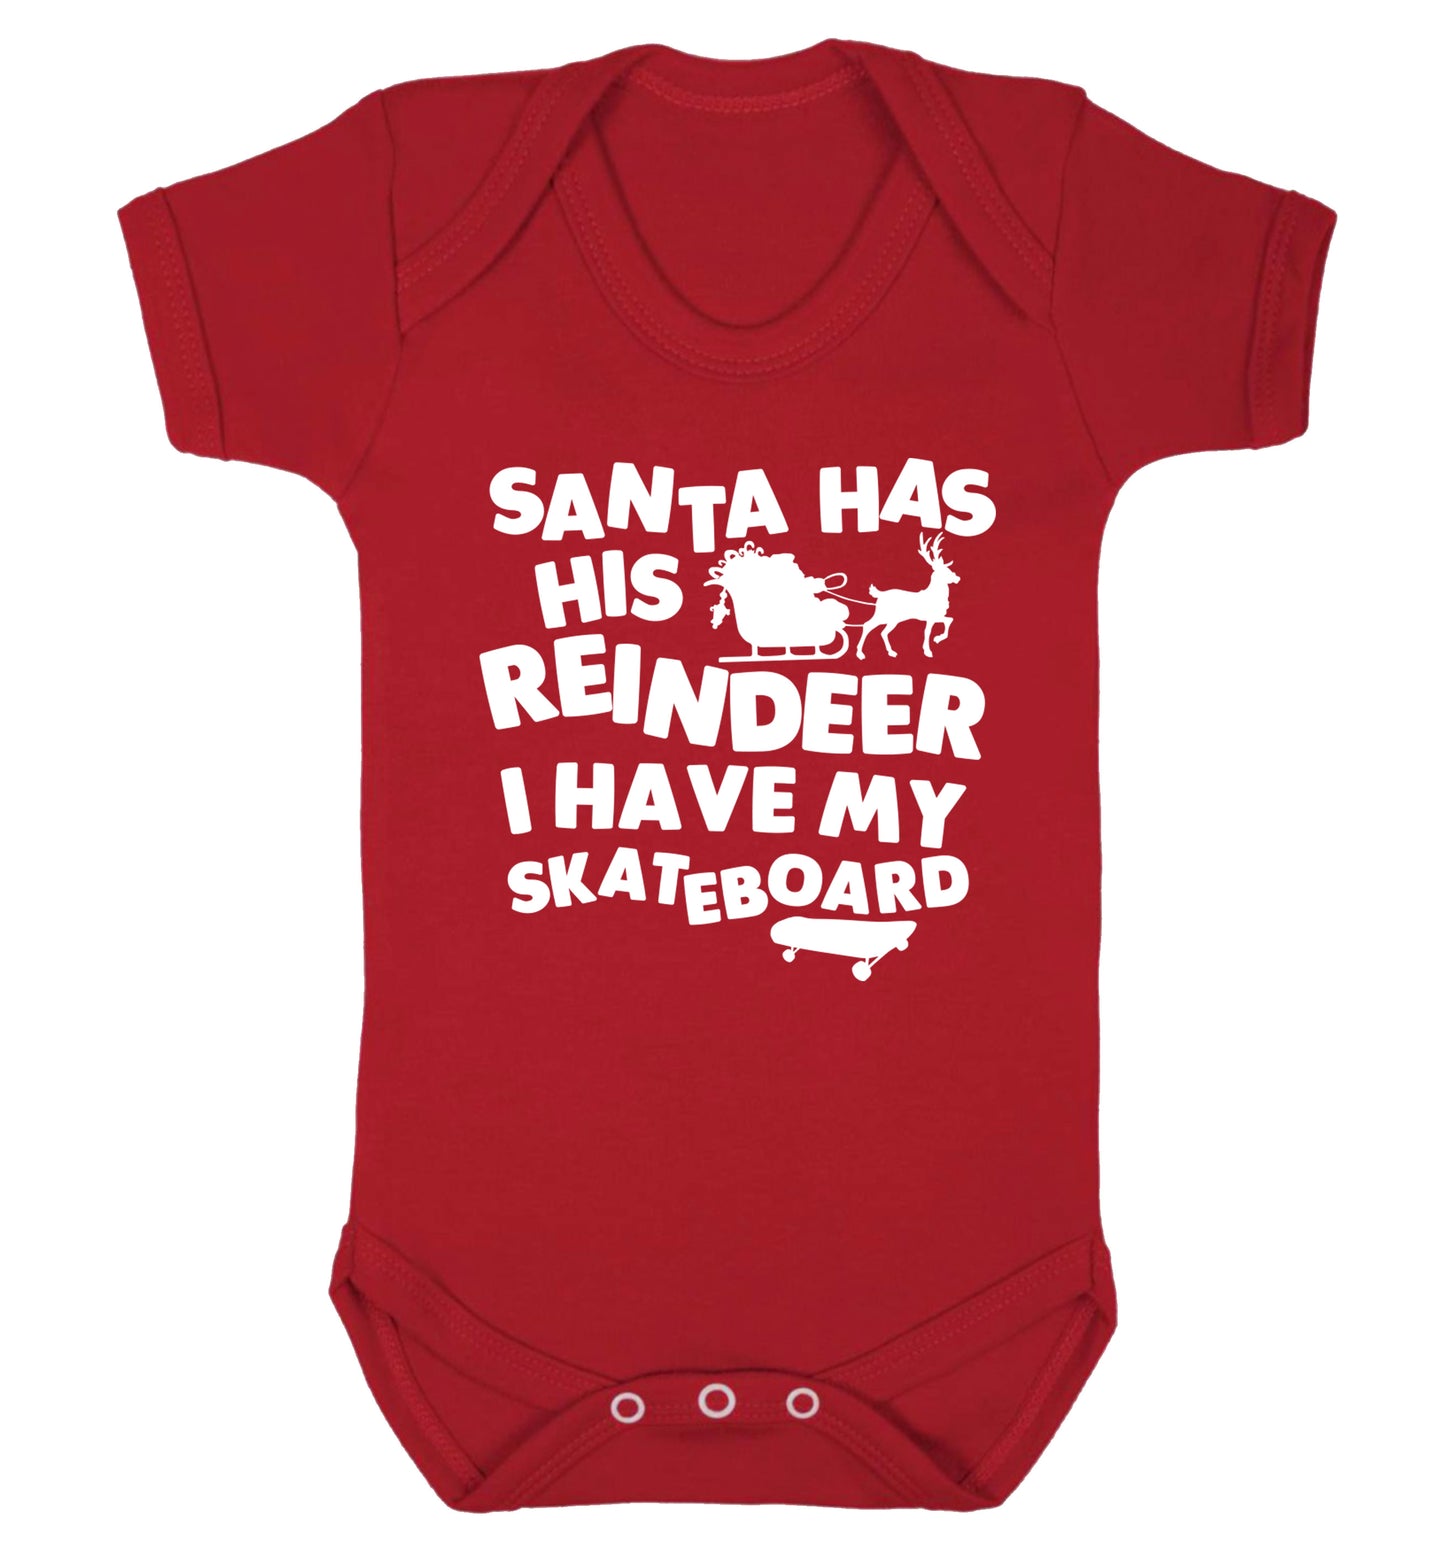 Santa has his reindeer I have my skateboard Baby Vest red 18-24 months